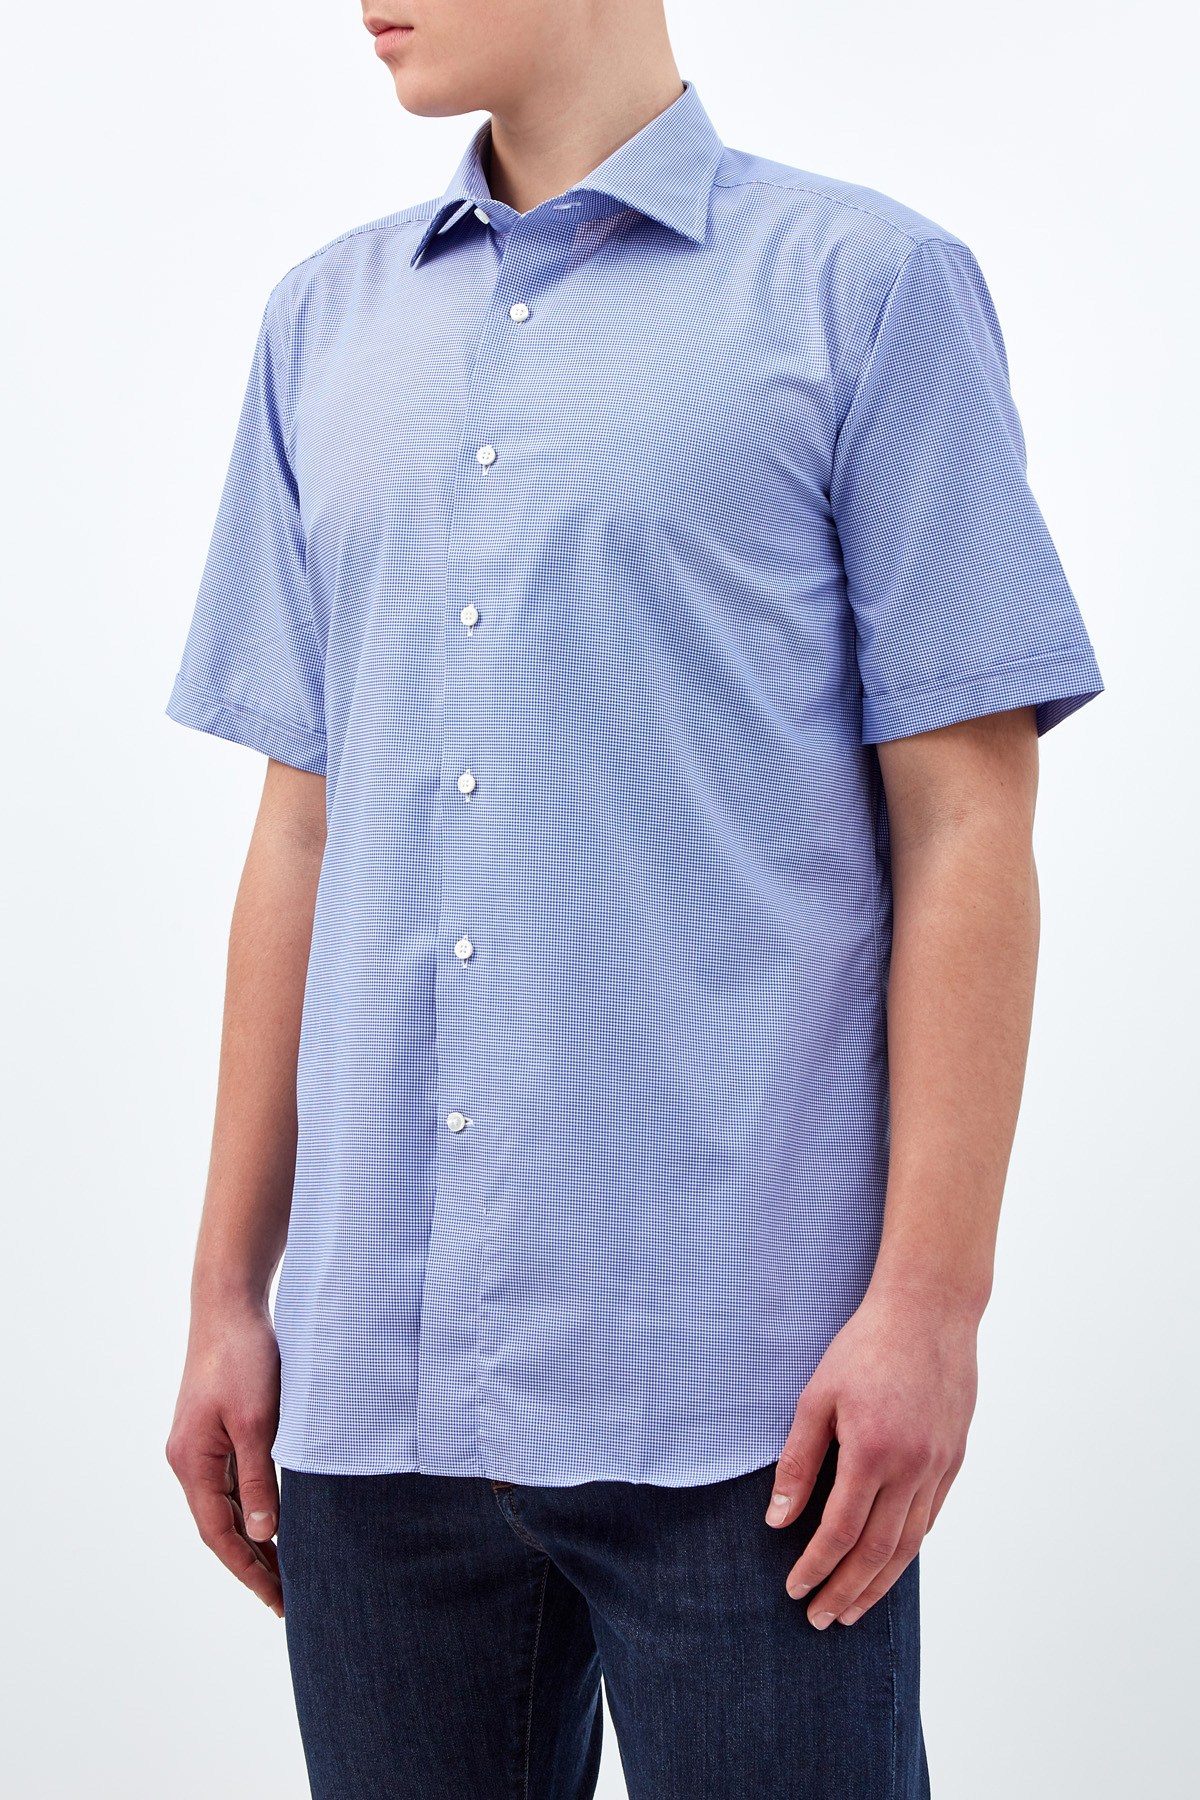 Рубашка с микро-принтом в клетку виши из хлопка Impeccabile CANALI, цвет синий, размер 58;60 - фото 3